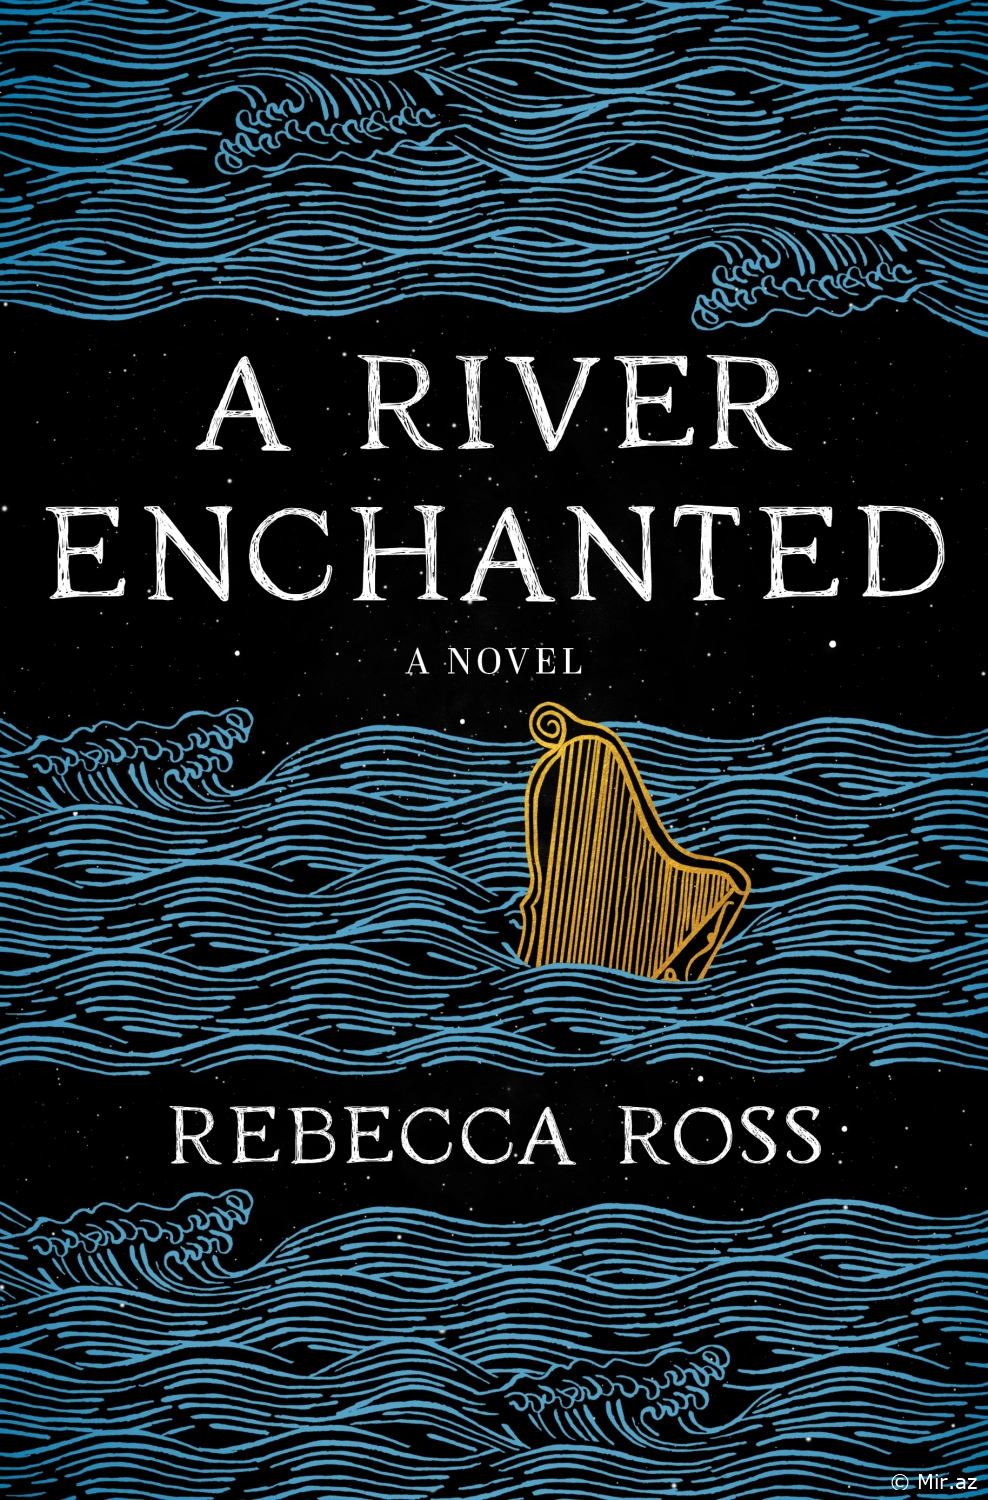 Rebecca Ross "A River Enchanted" PDF